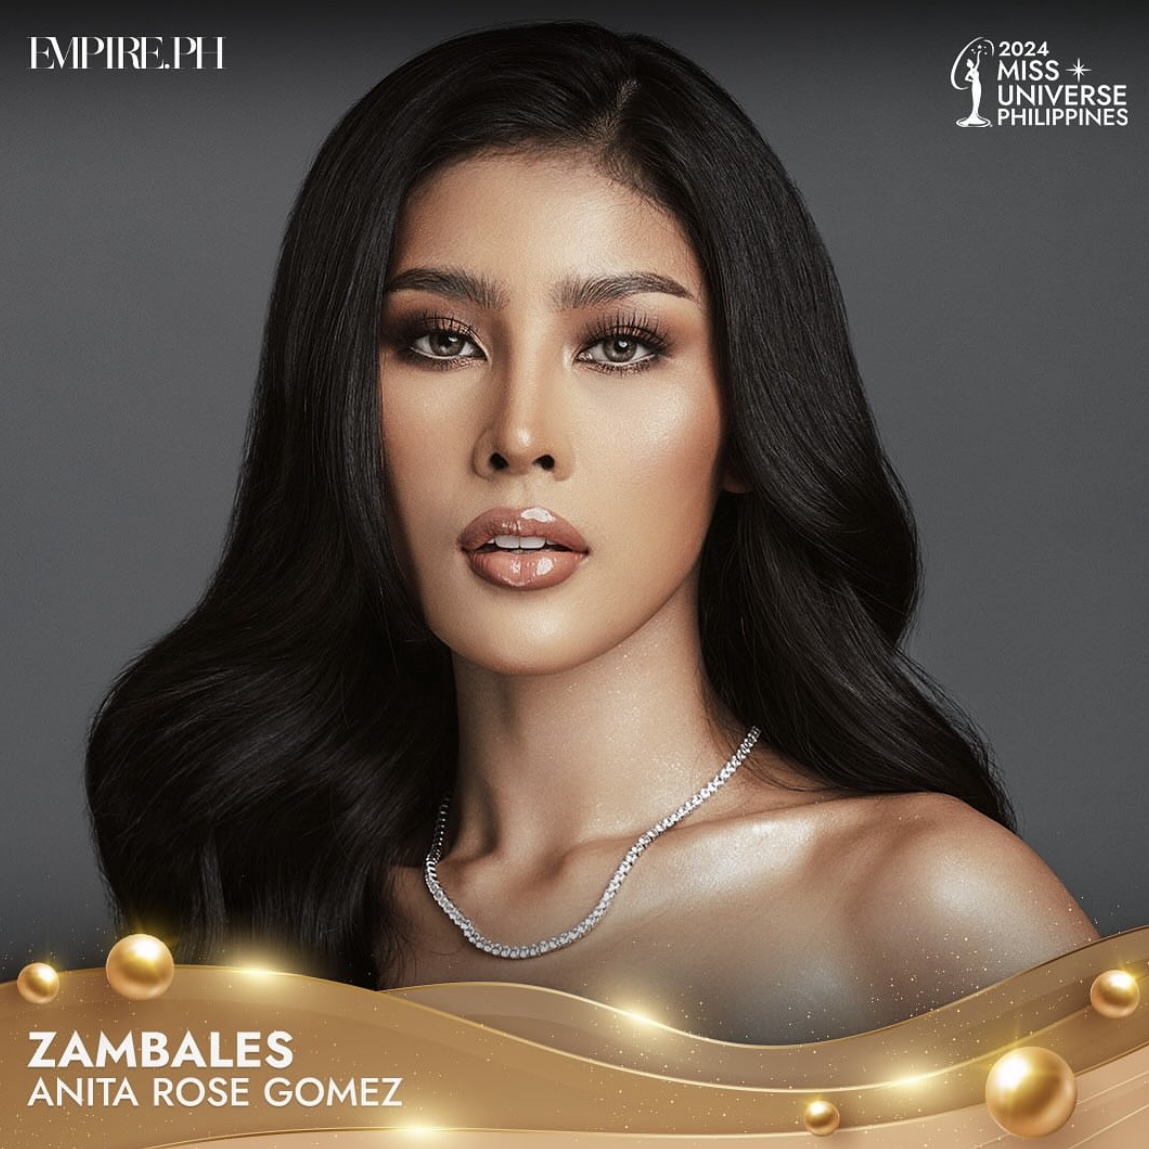  Miss Universe Philippines 2024 zambales anita rose gomez